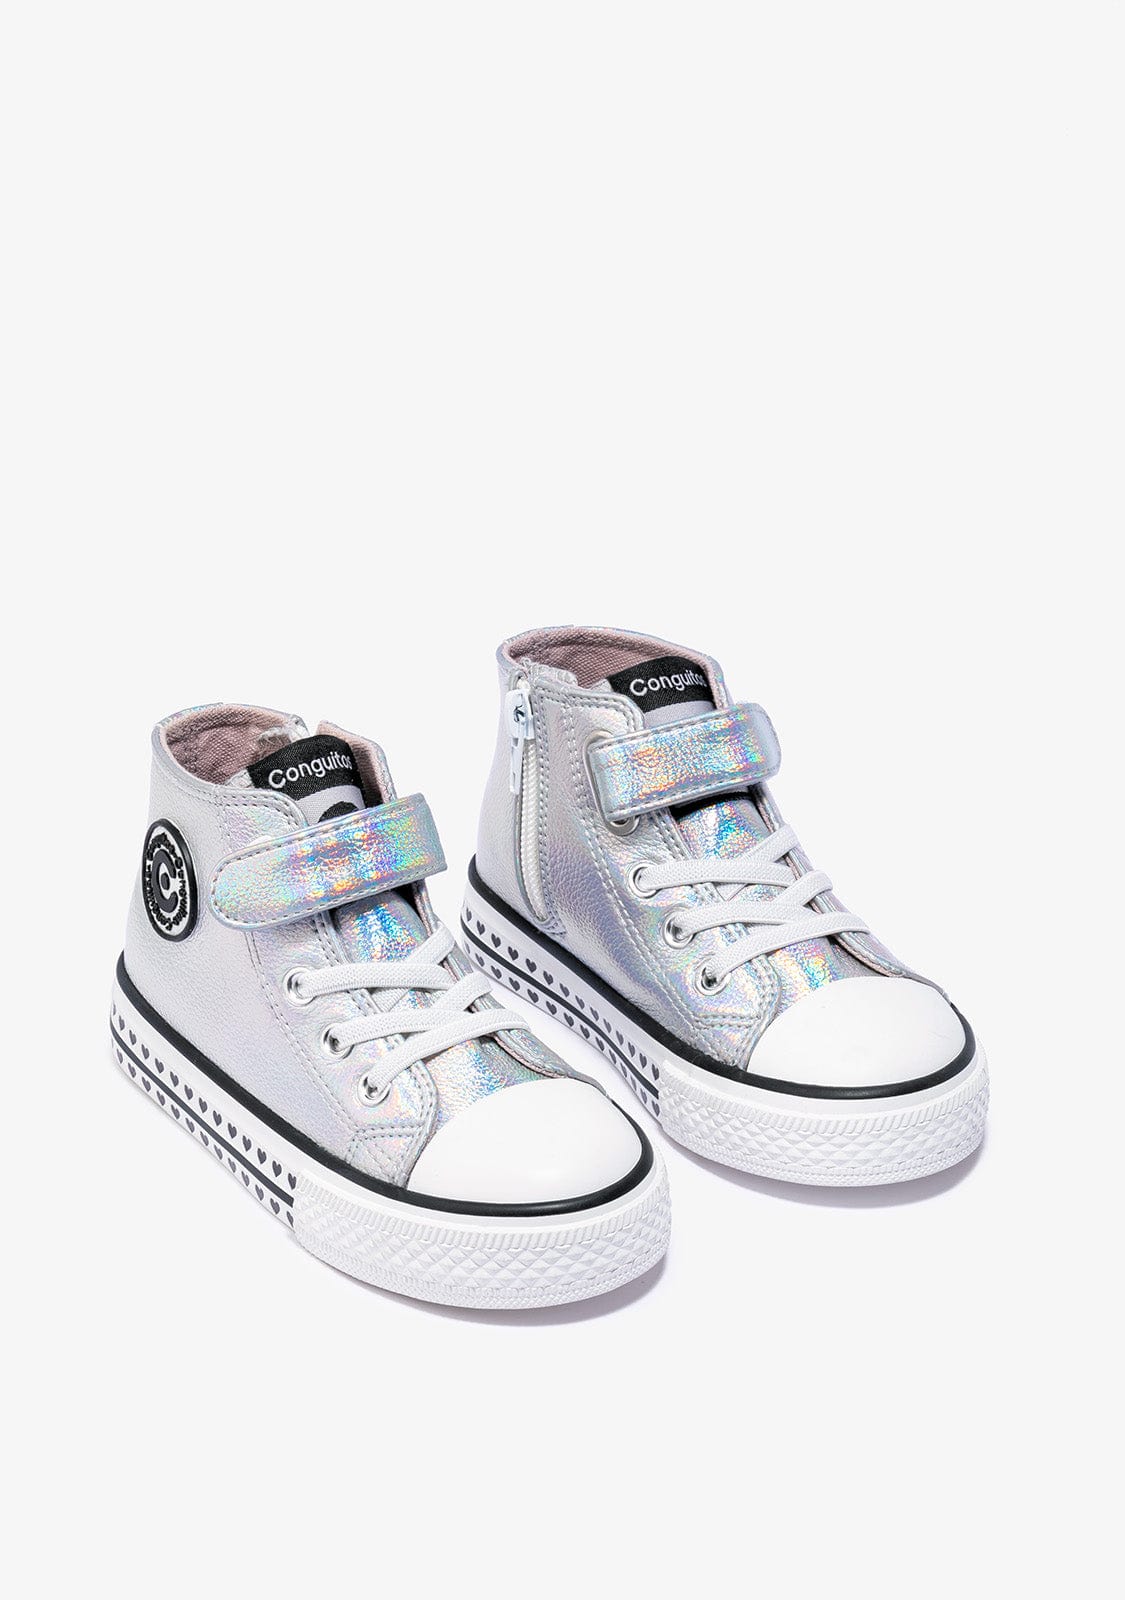 CONGUITOS Shoes Girl's Iridescent Silver Hi-Top Sneakers